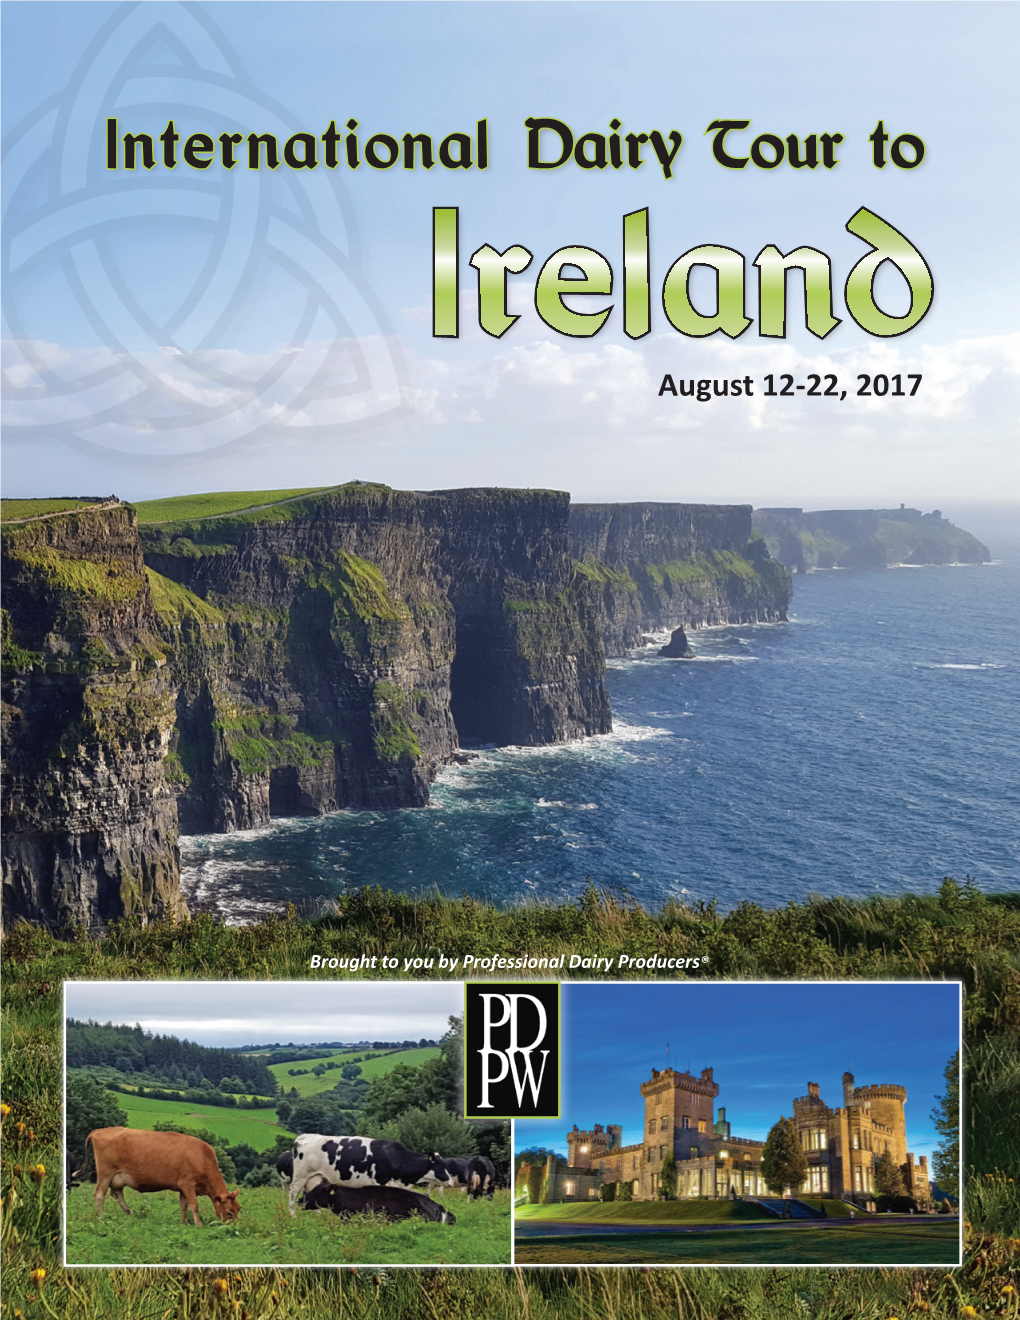 International Dairy Tour to Ireland August 12-22, 2017